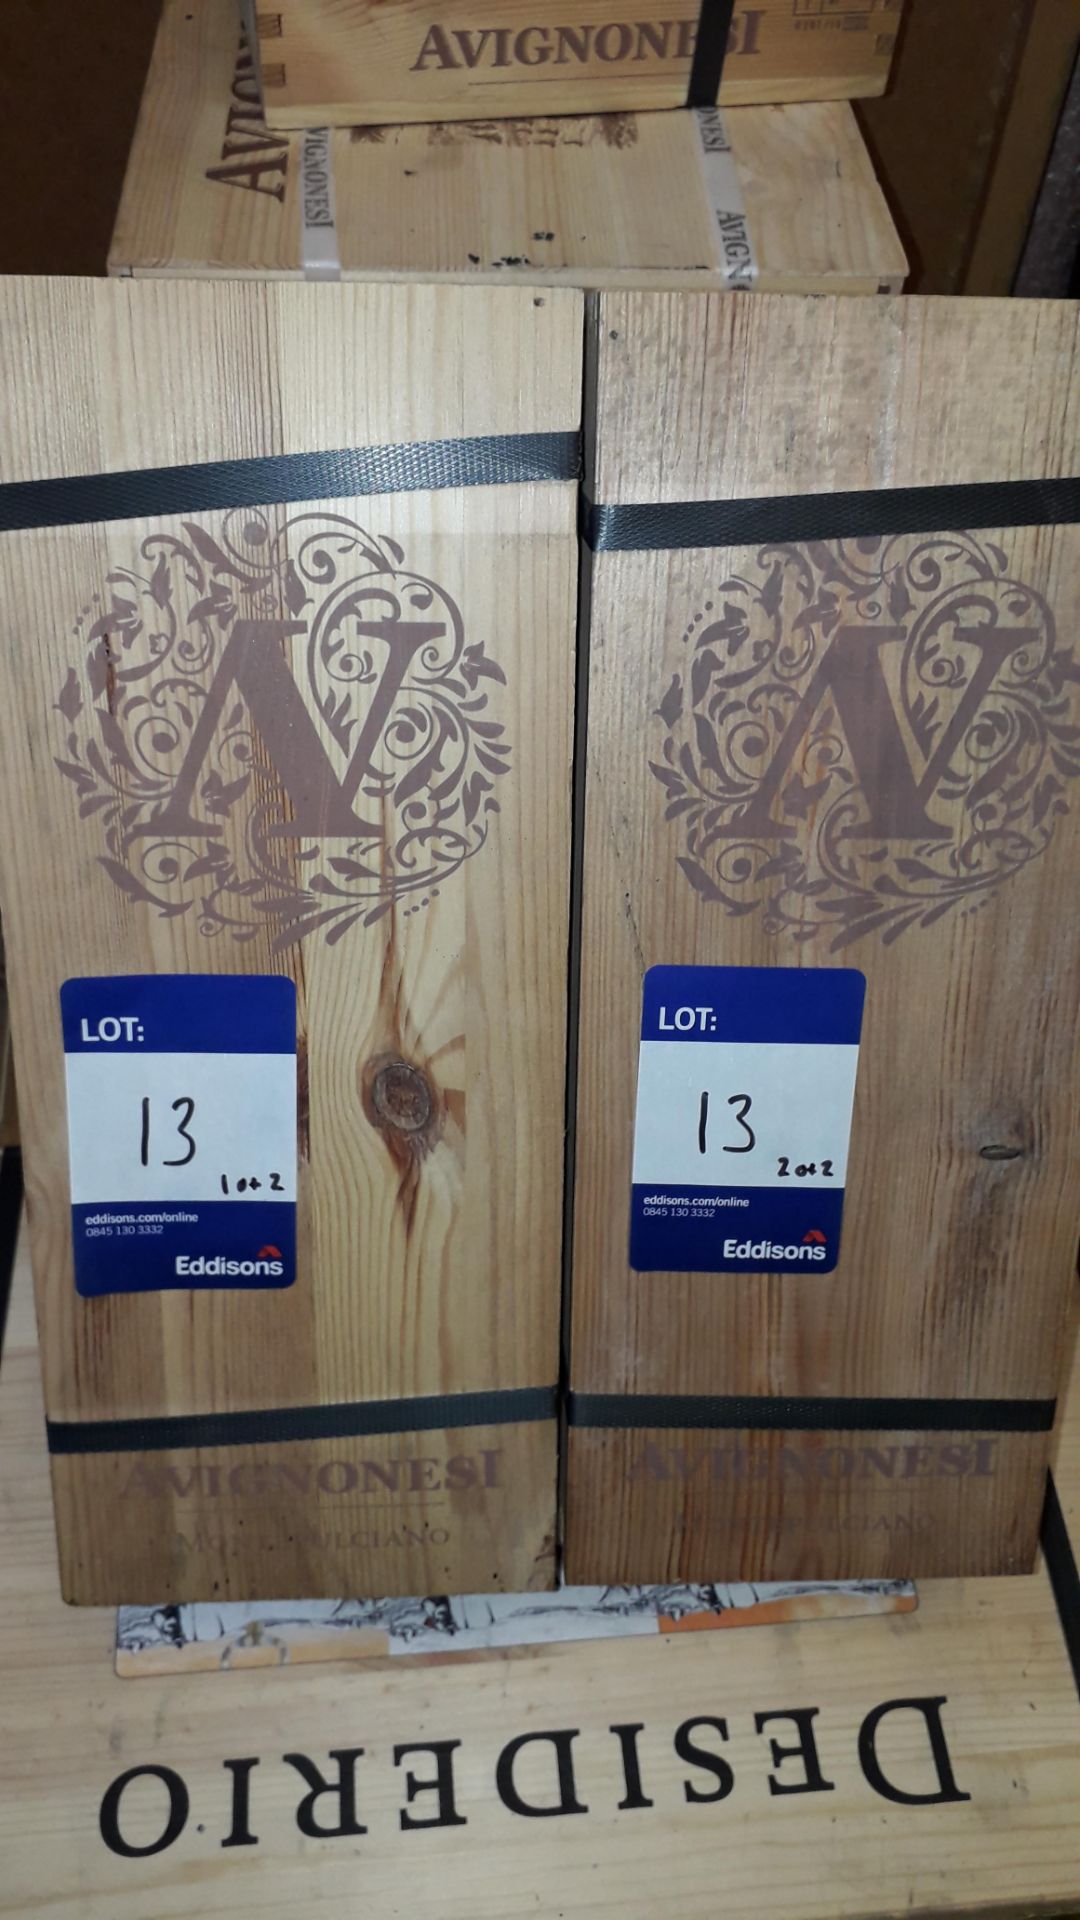 2 Avignonesi Vino Nobile Di Montepulciano (1 x 2012 and 1 x 2013), 3L